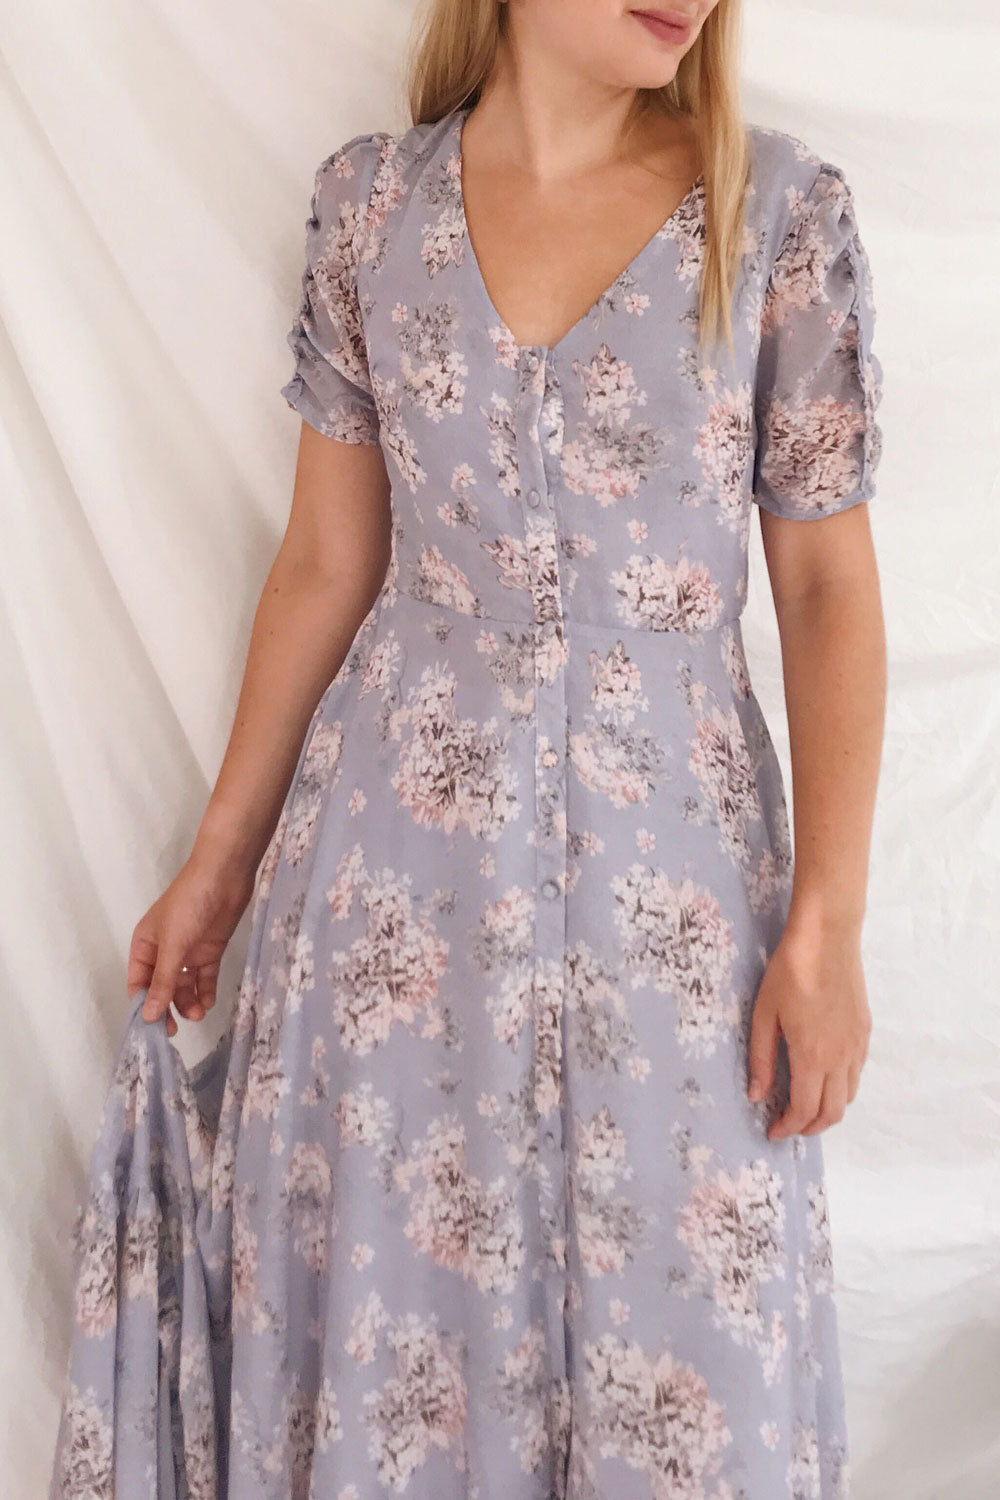 Espella Lilac Floral Buttoned Maxi Dress | Boutique 1861 on model